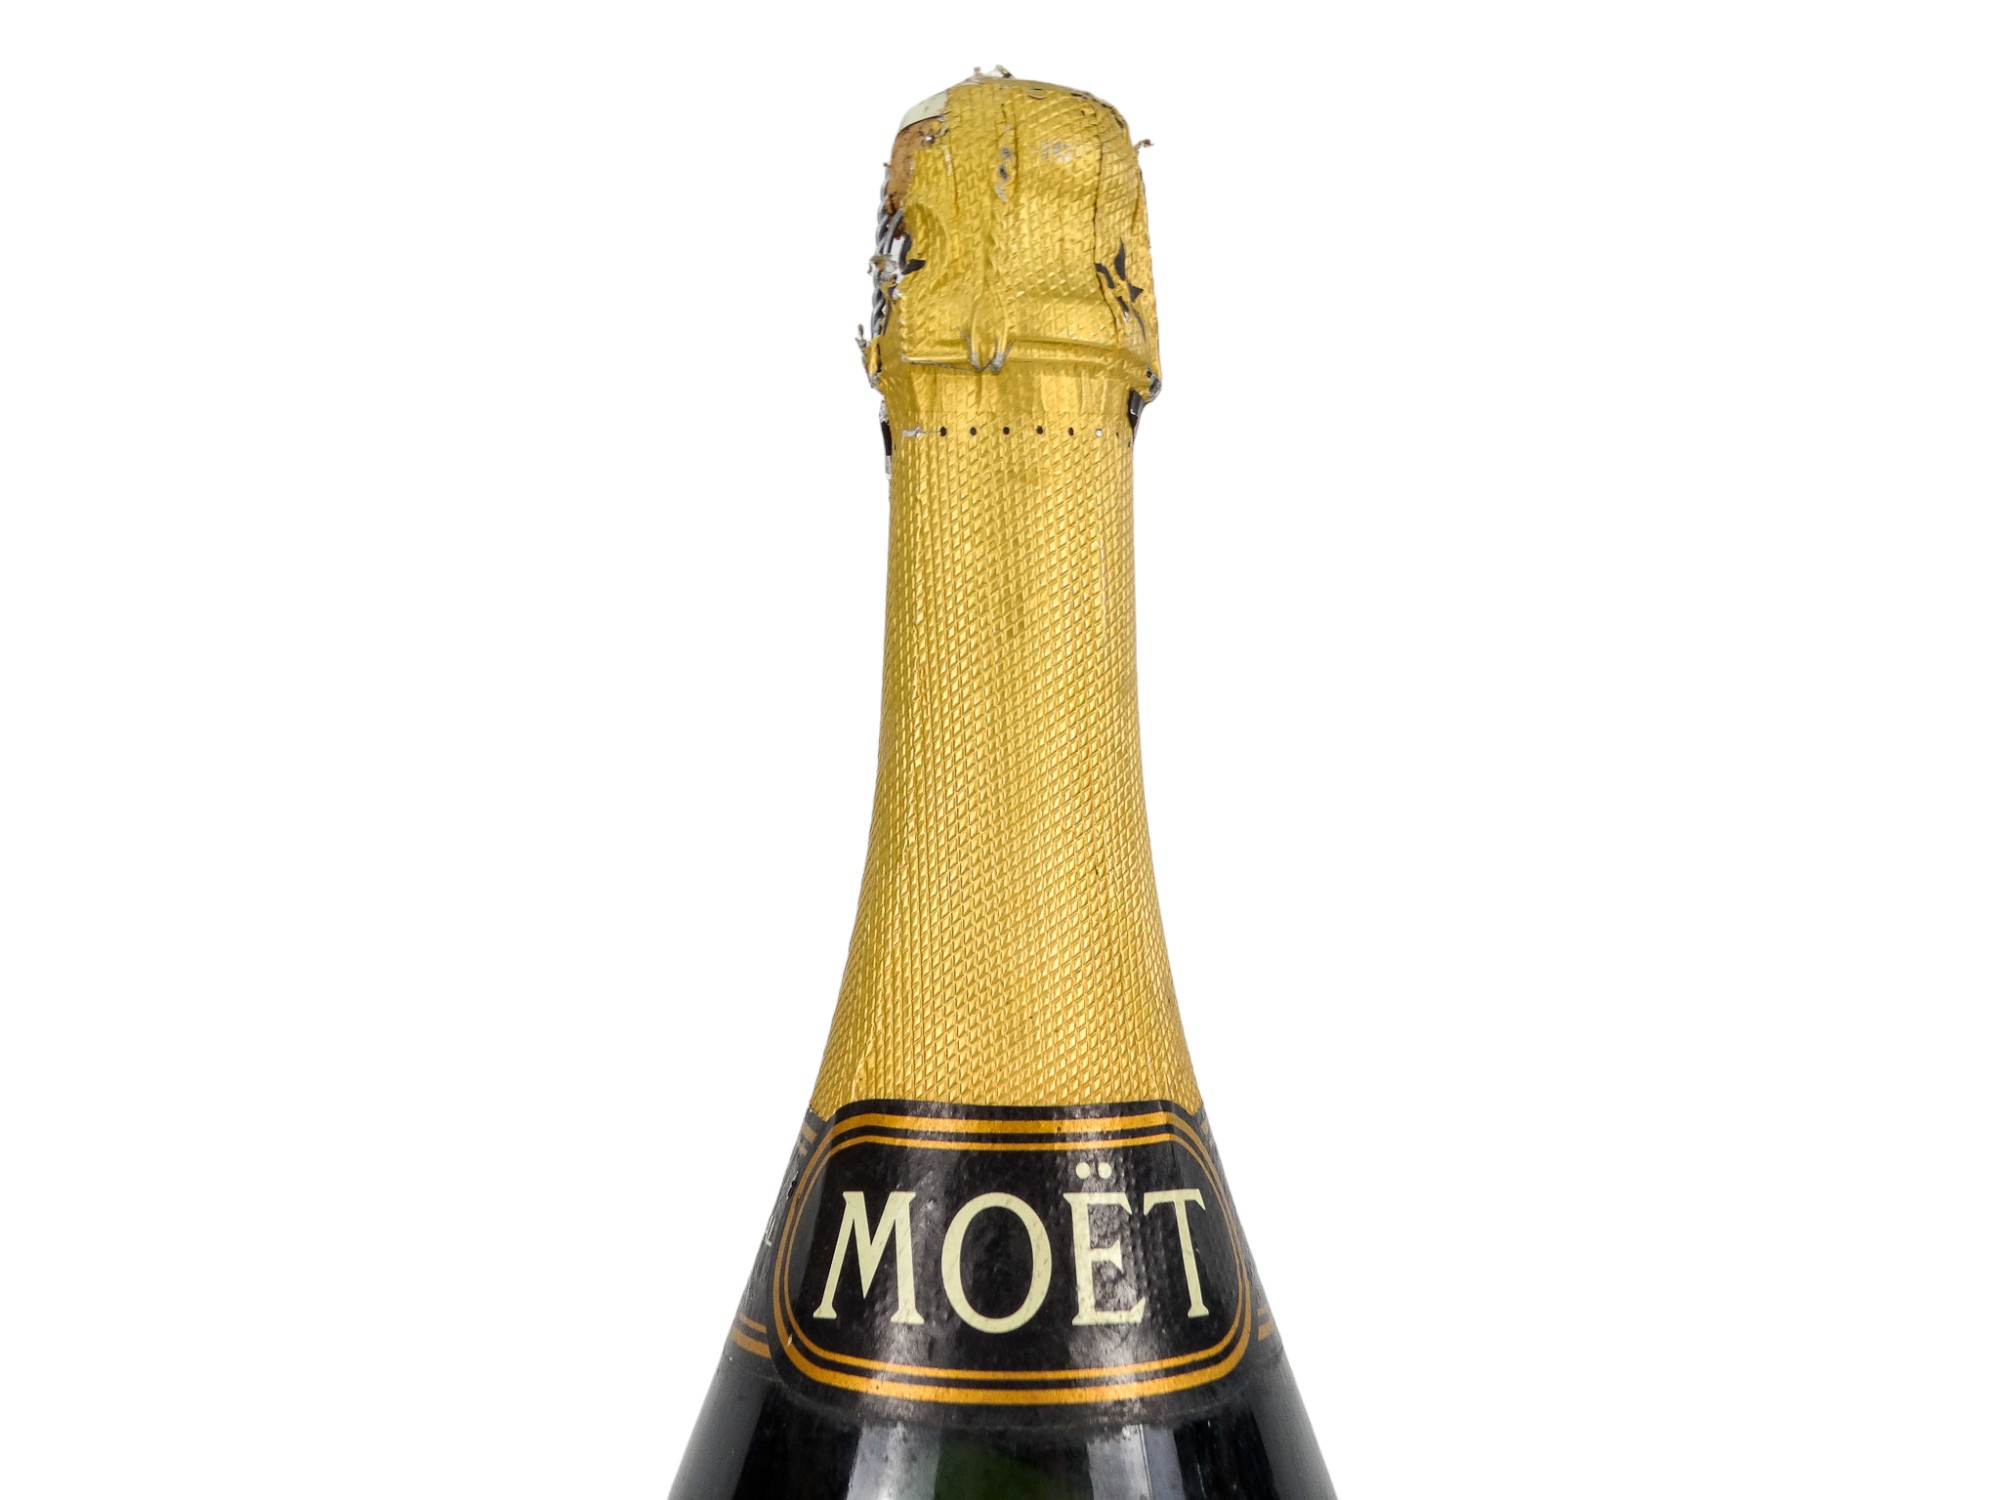 A magnum bottle of Moet & Chandon champagne. - Image 4 of 7